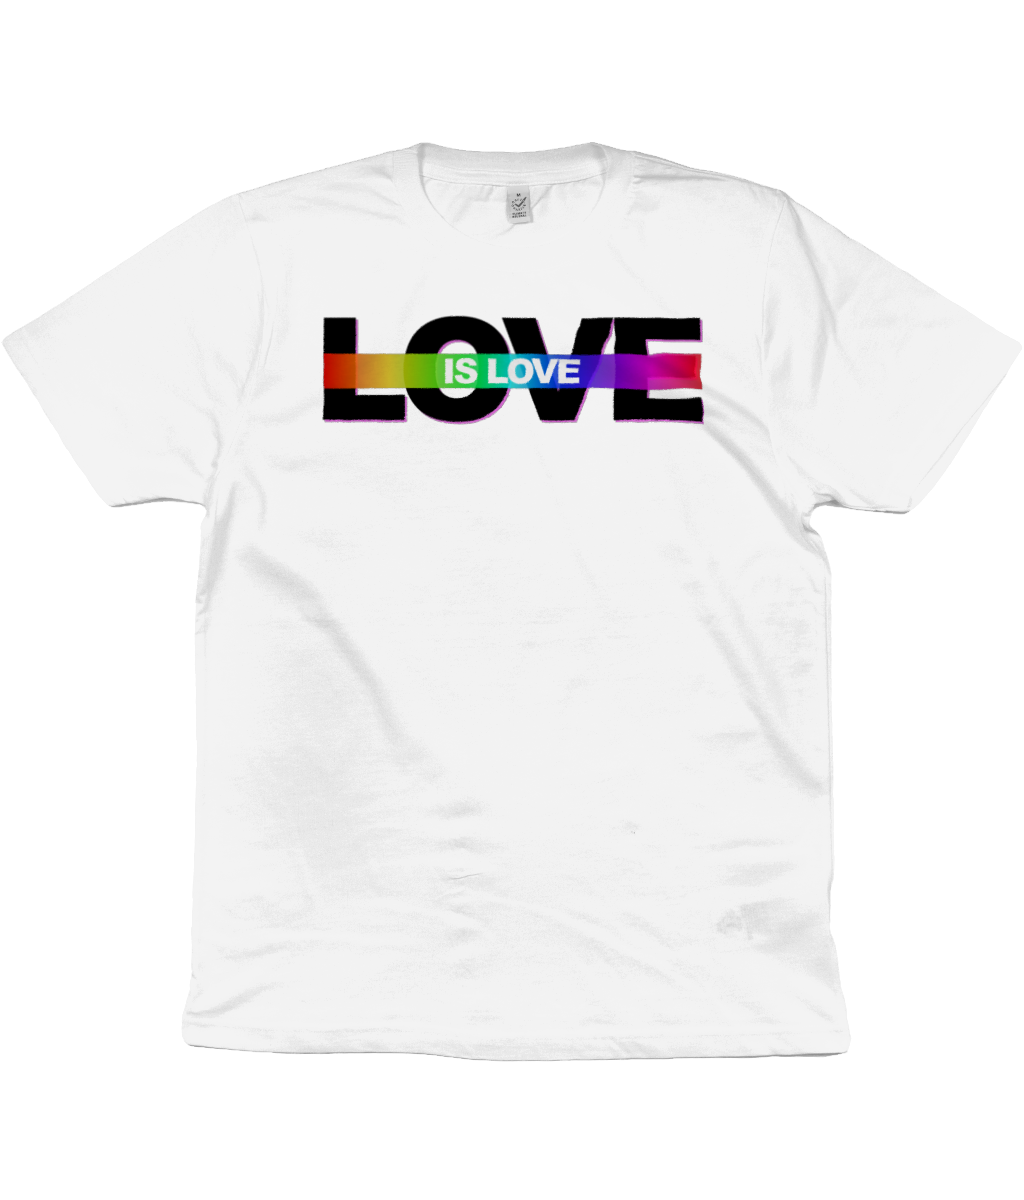 Love is Love Organic Cotton T-Shirt